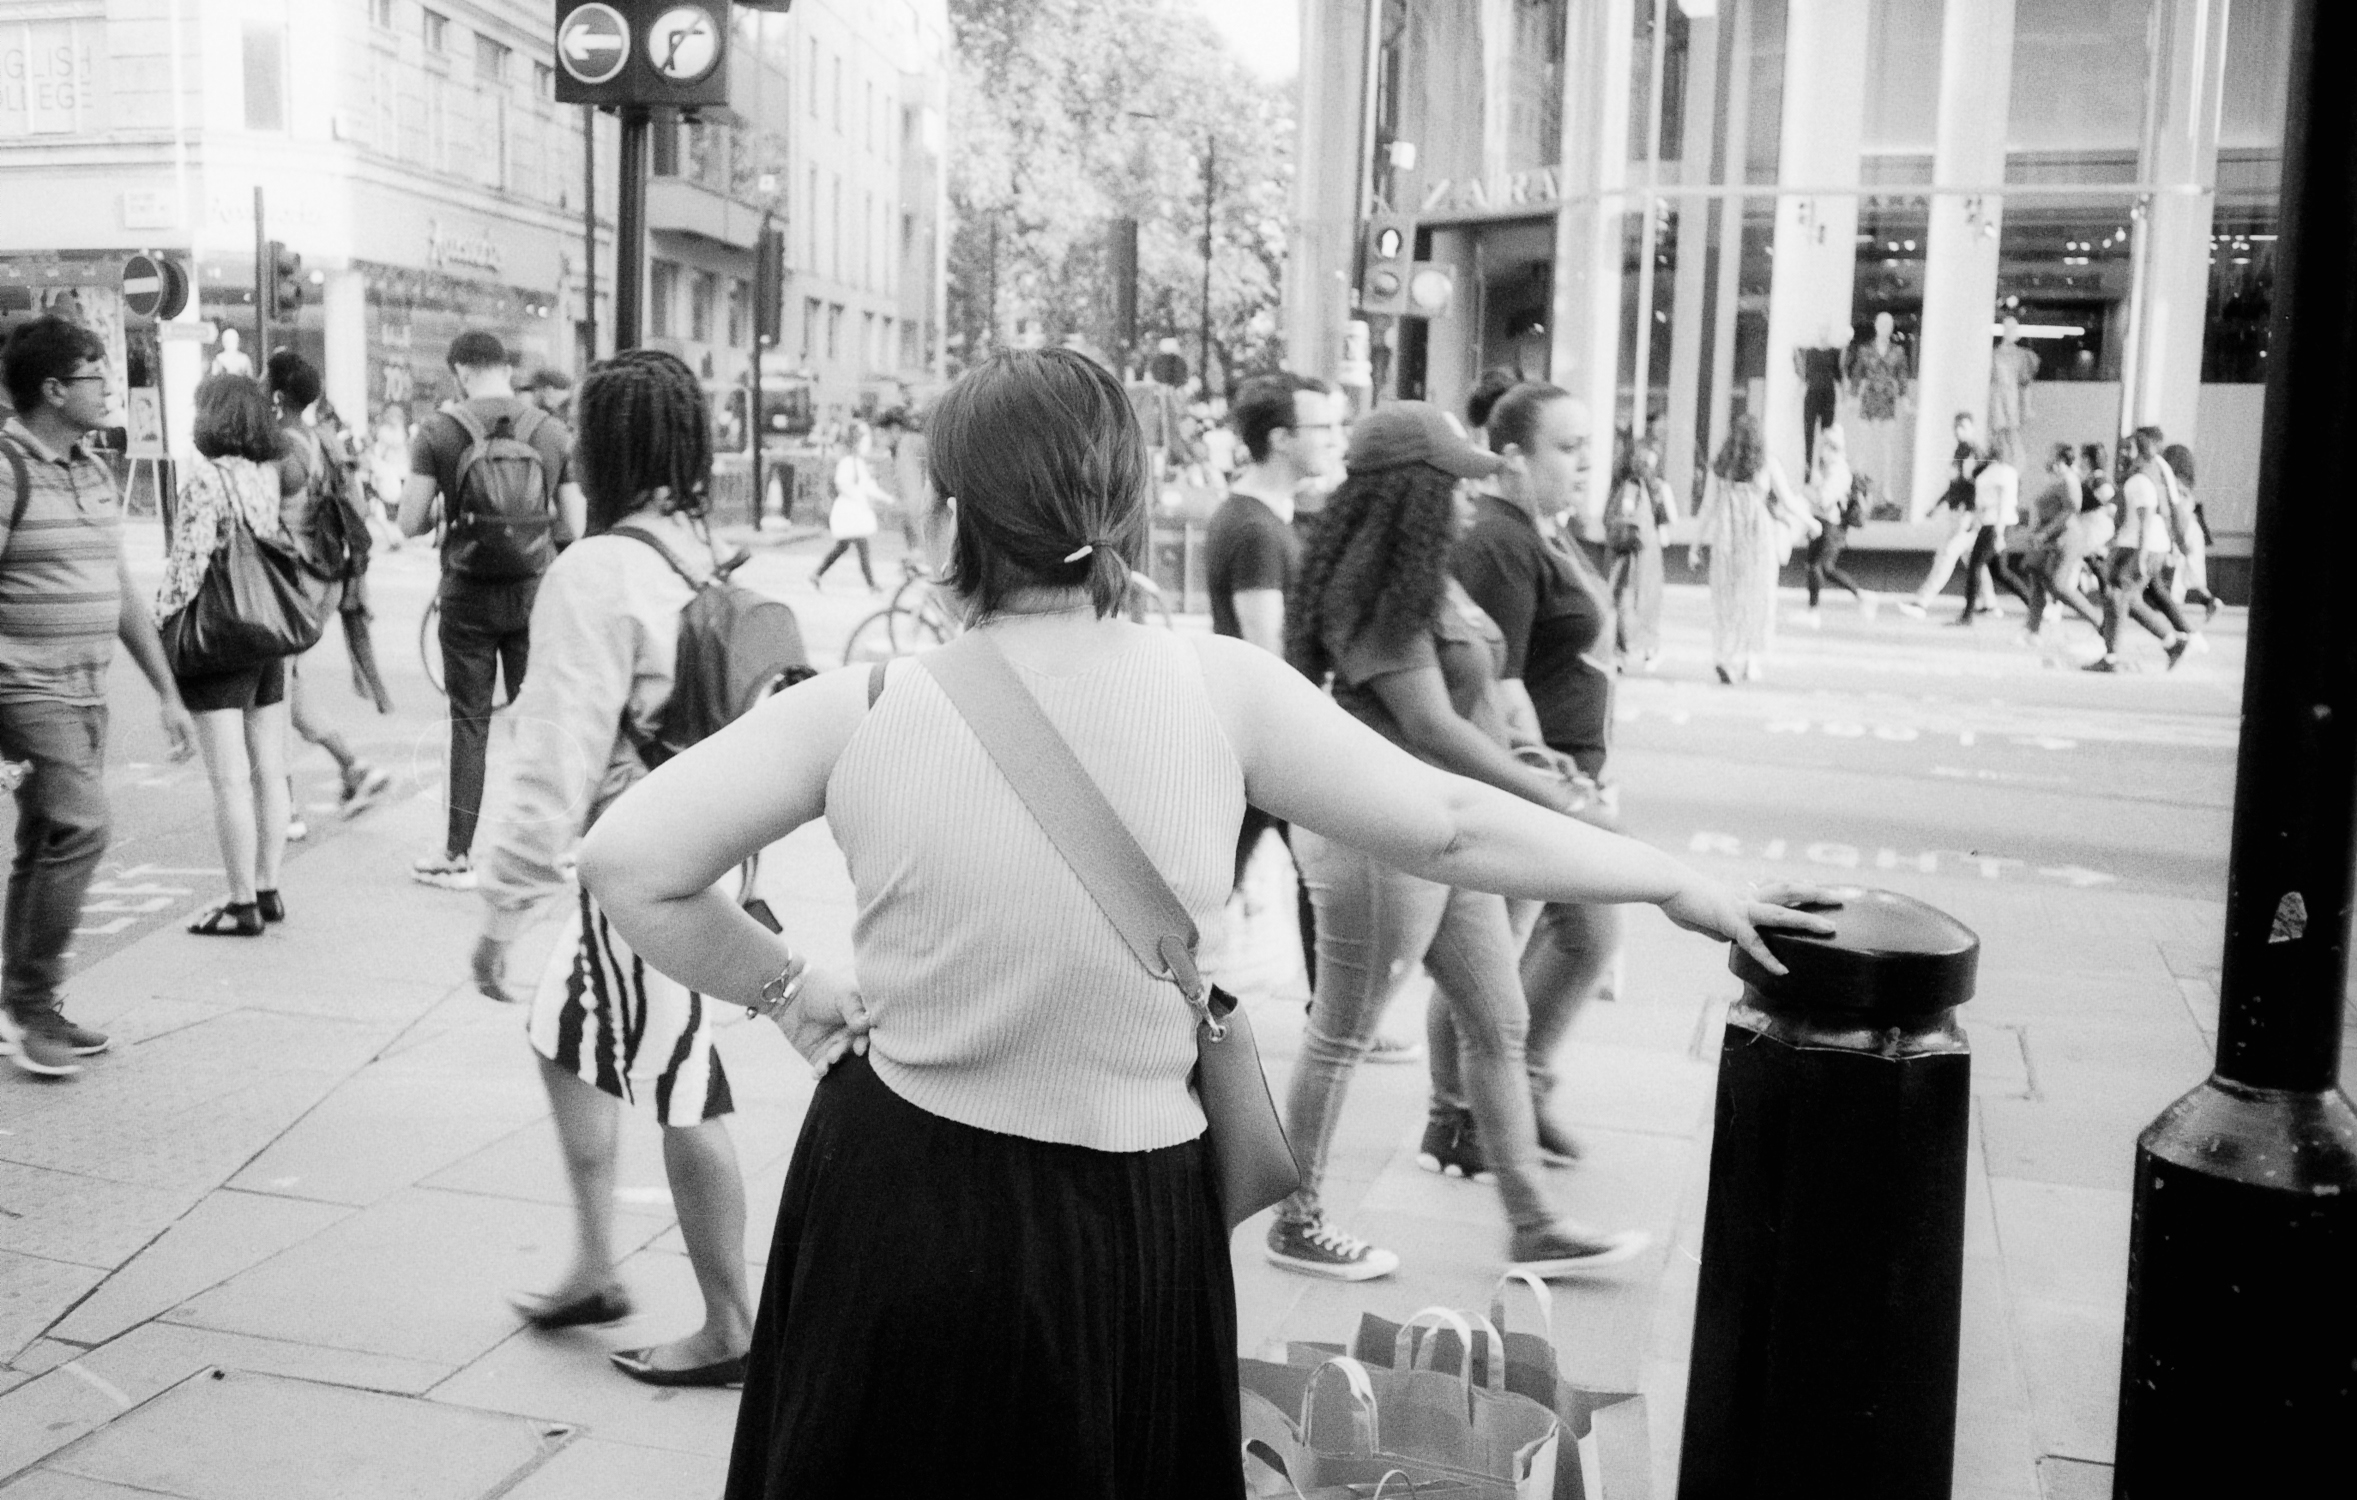 Woman leaning on bollard (Pic: Stephen Dowling)